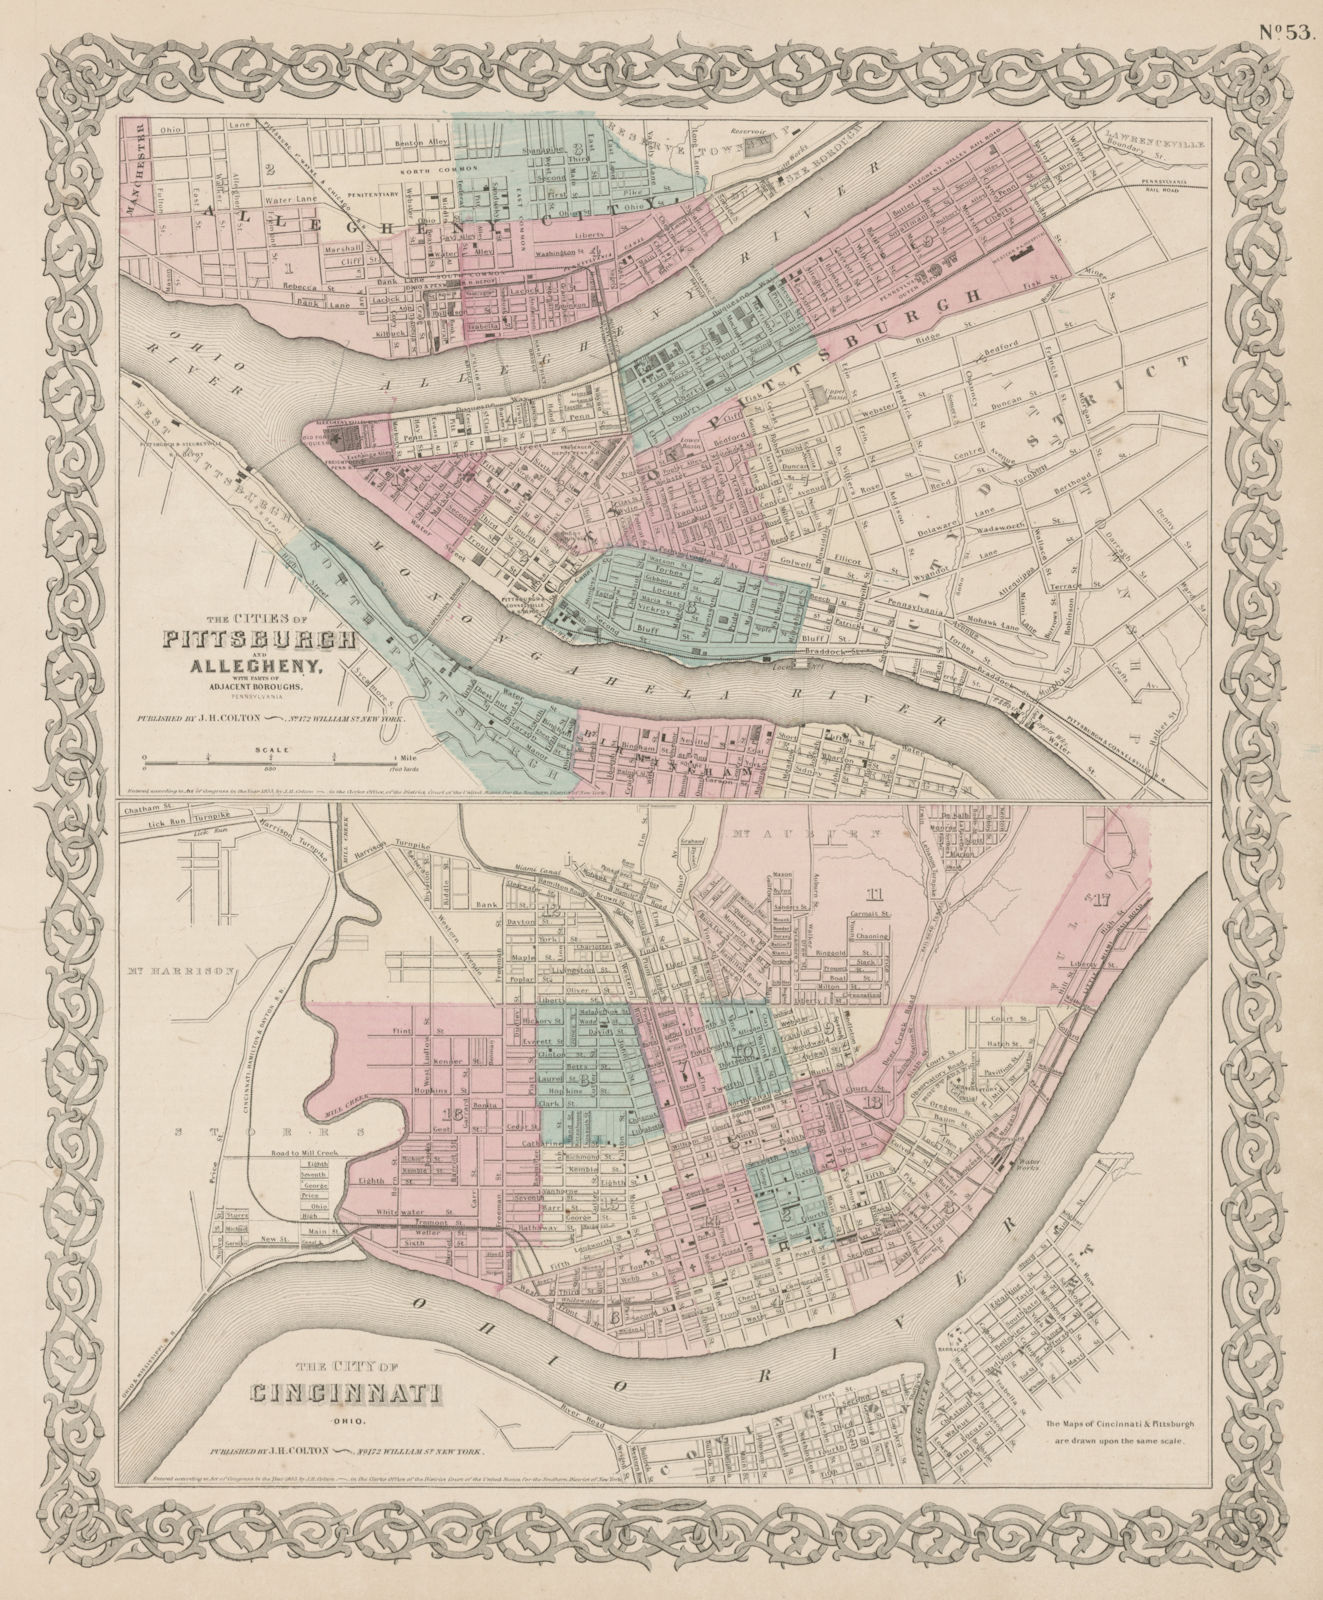 Pittsburgh/Allegheny, Pennsylvania. Cincinnati, Ohio city plans COLTON 1863 map